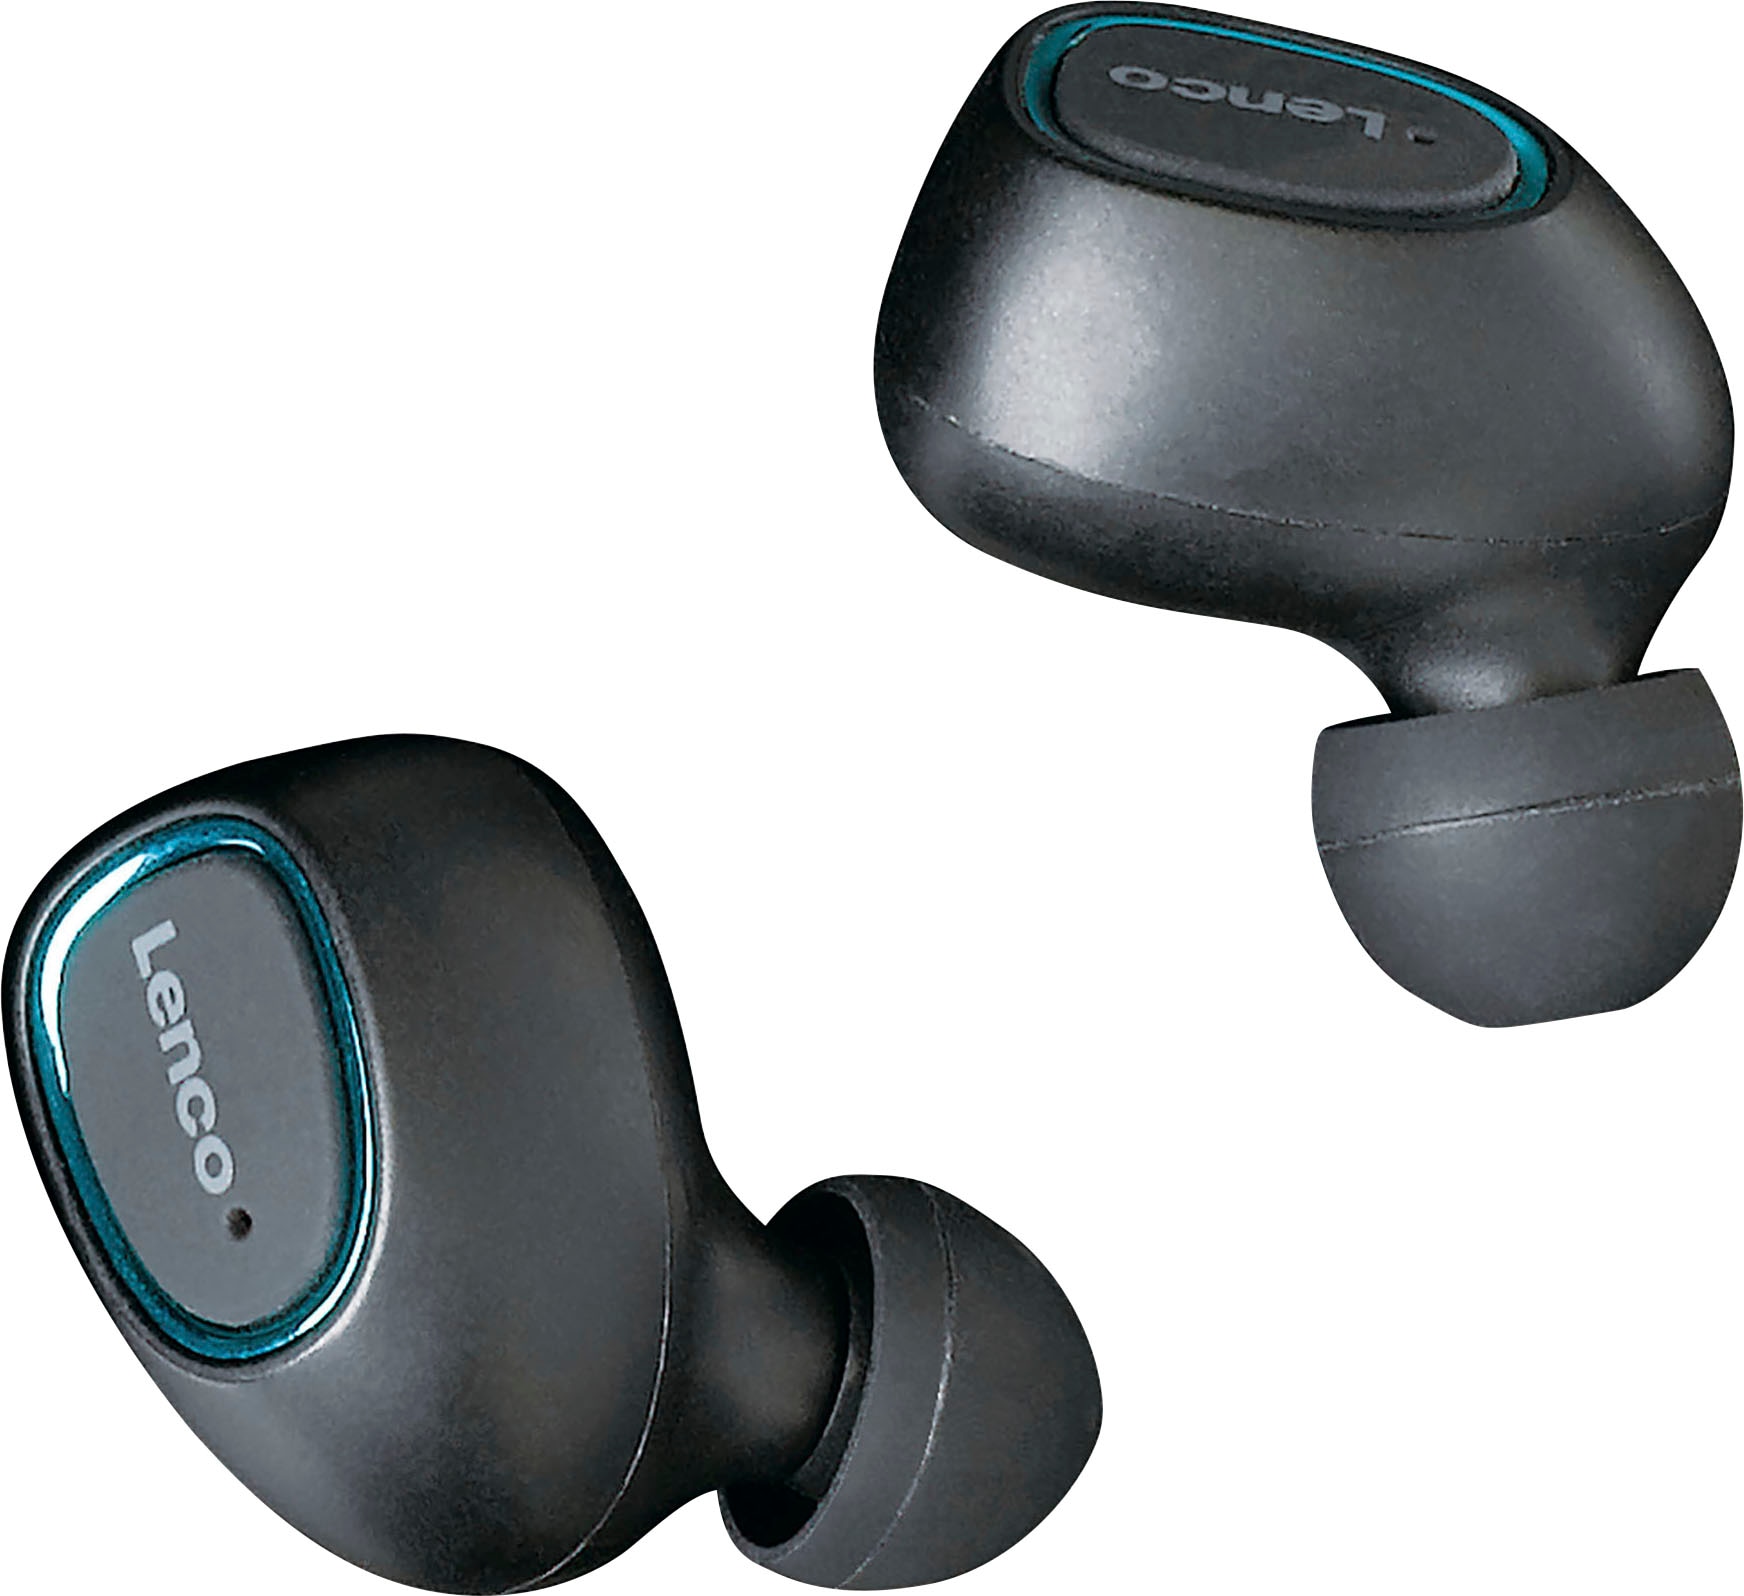 Hama Bluetooth-Kopfhörer OTTO Ear jetzt In Sensor, Finger-Touch BT bei »Spirit True Sprachsteuerung Wireless, Pure Kopfhörer kabellos«, Lautstärkeregler,Rufannahmetaste